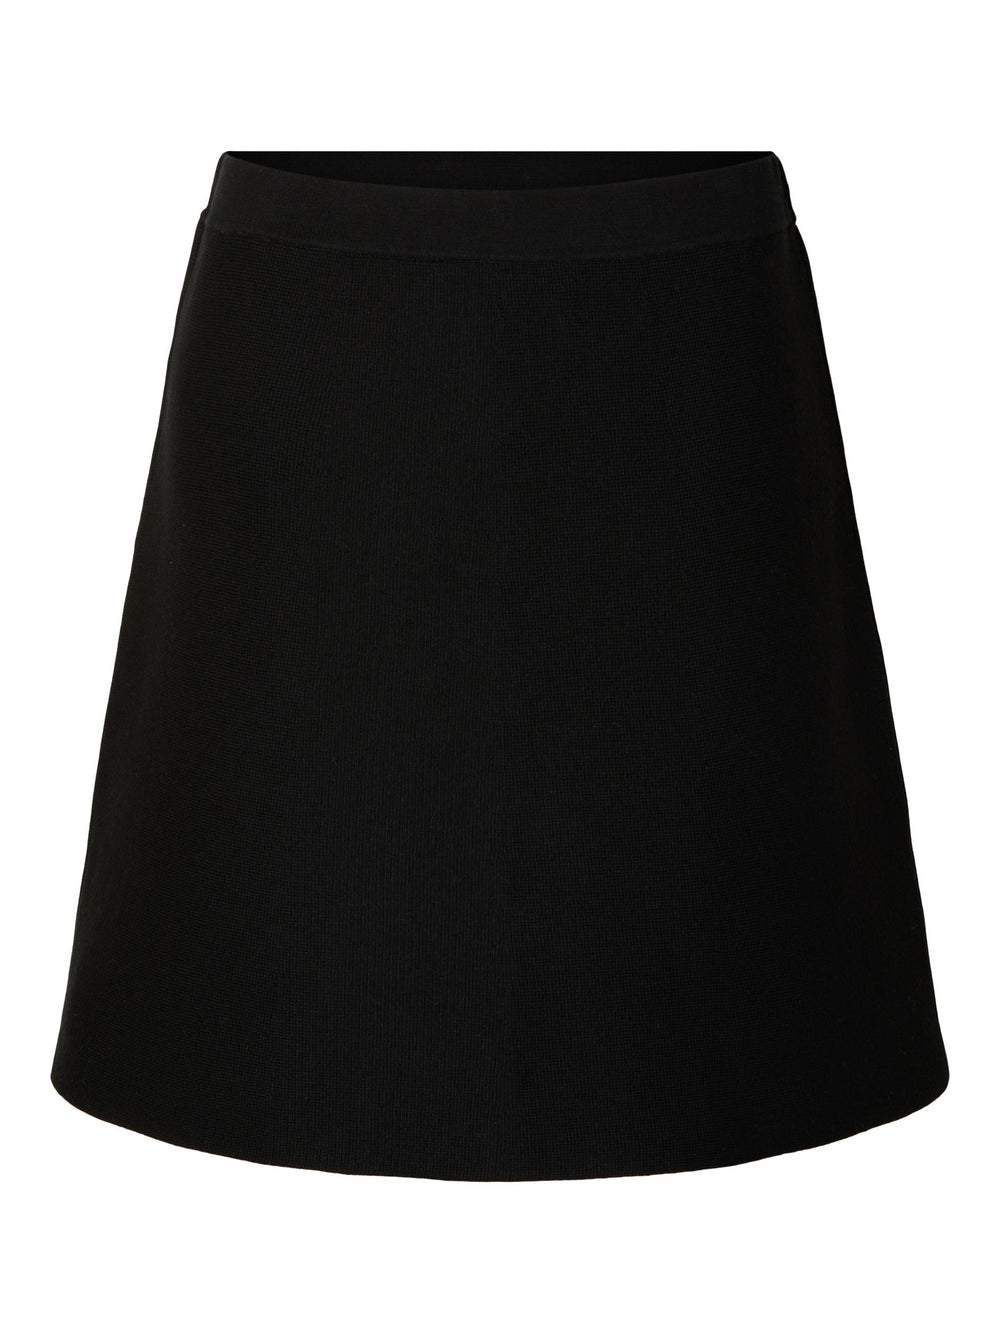 SLFLIVA Black Knit Skirt